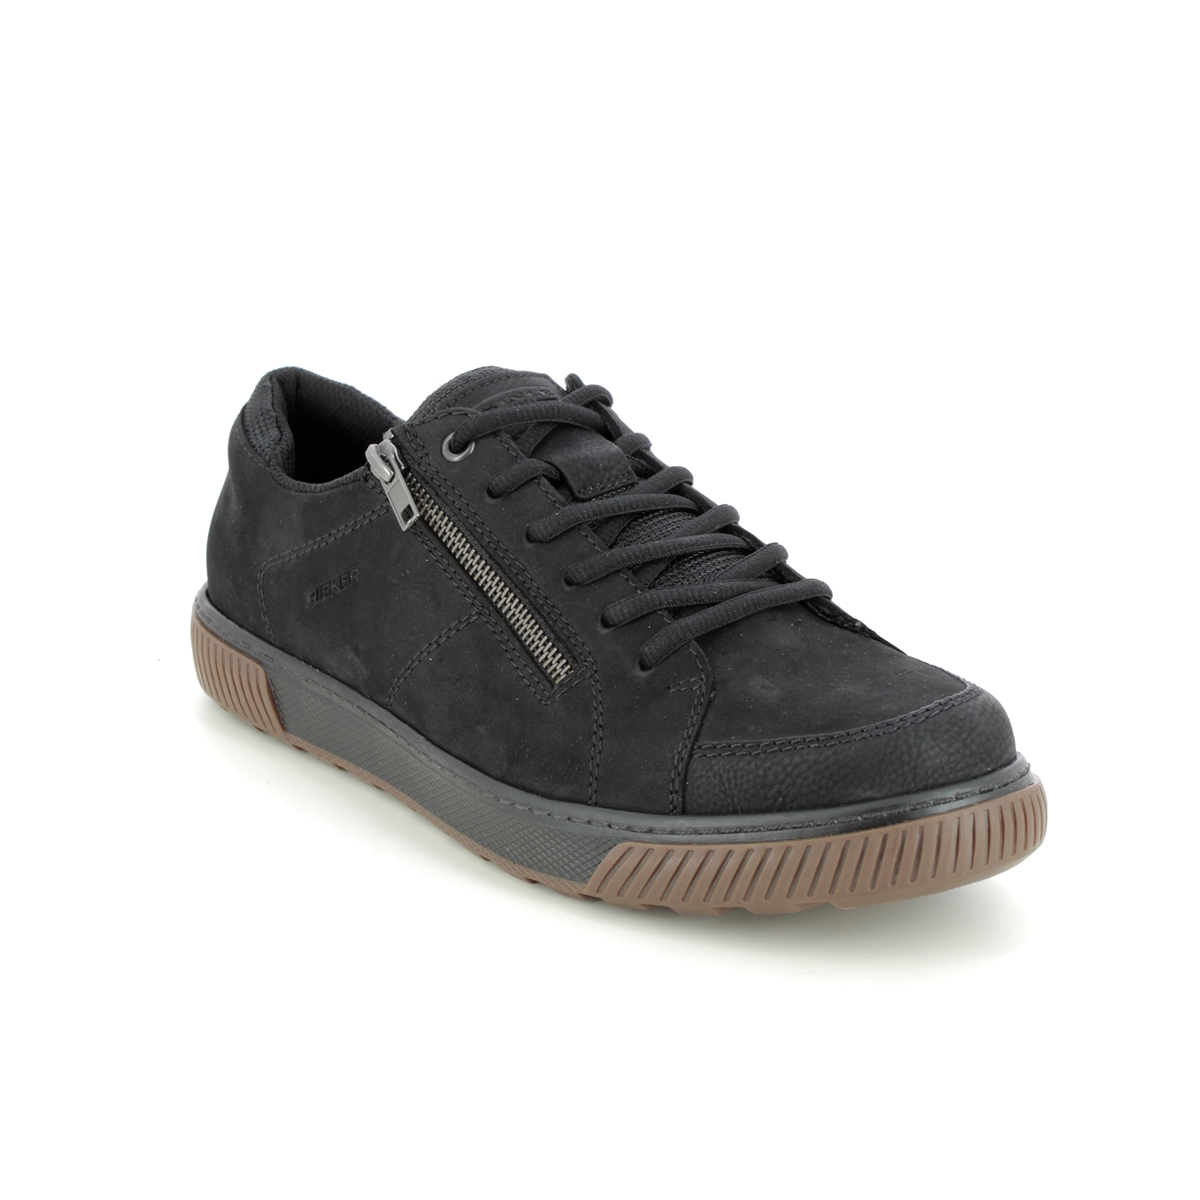 Rieker Urbanzi Black Suede Mens Comfort Shoes 18910-00 In Size 41 In Plain Black Suede